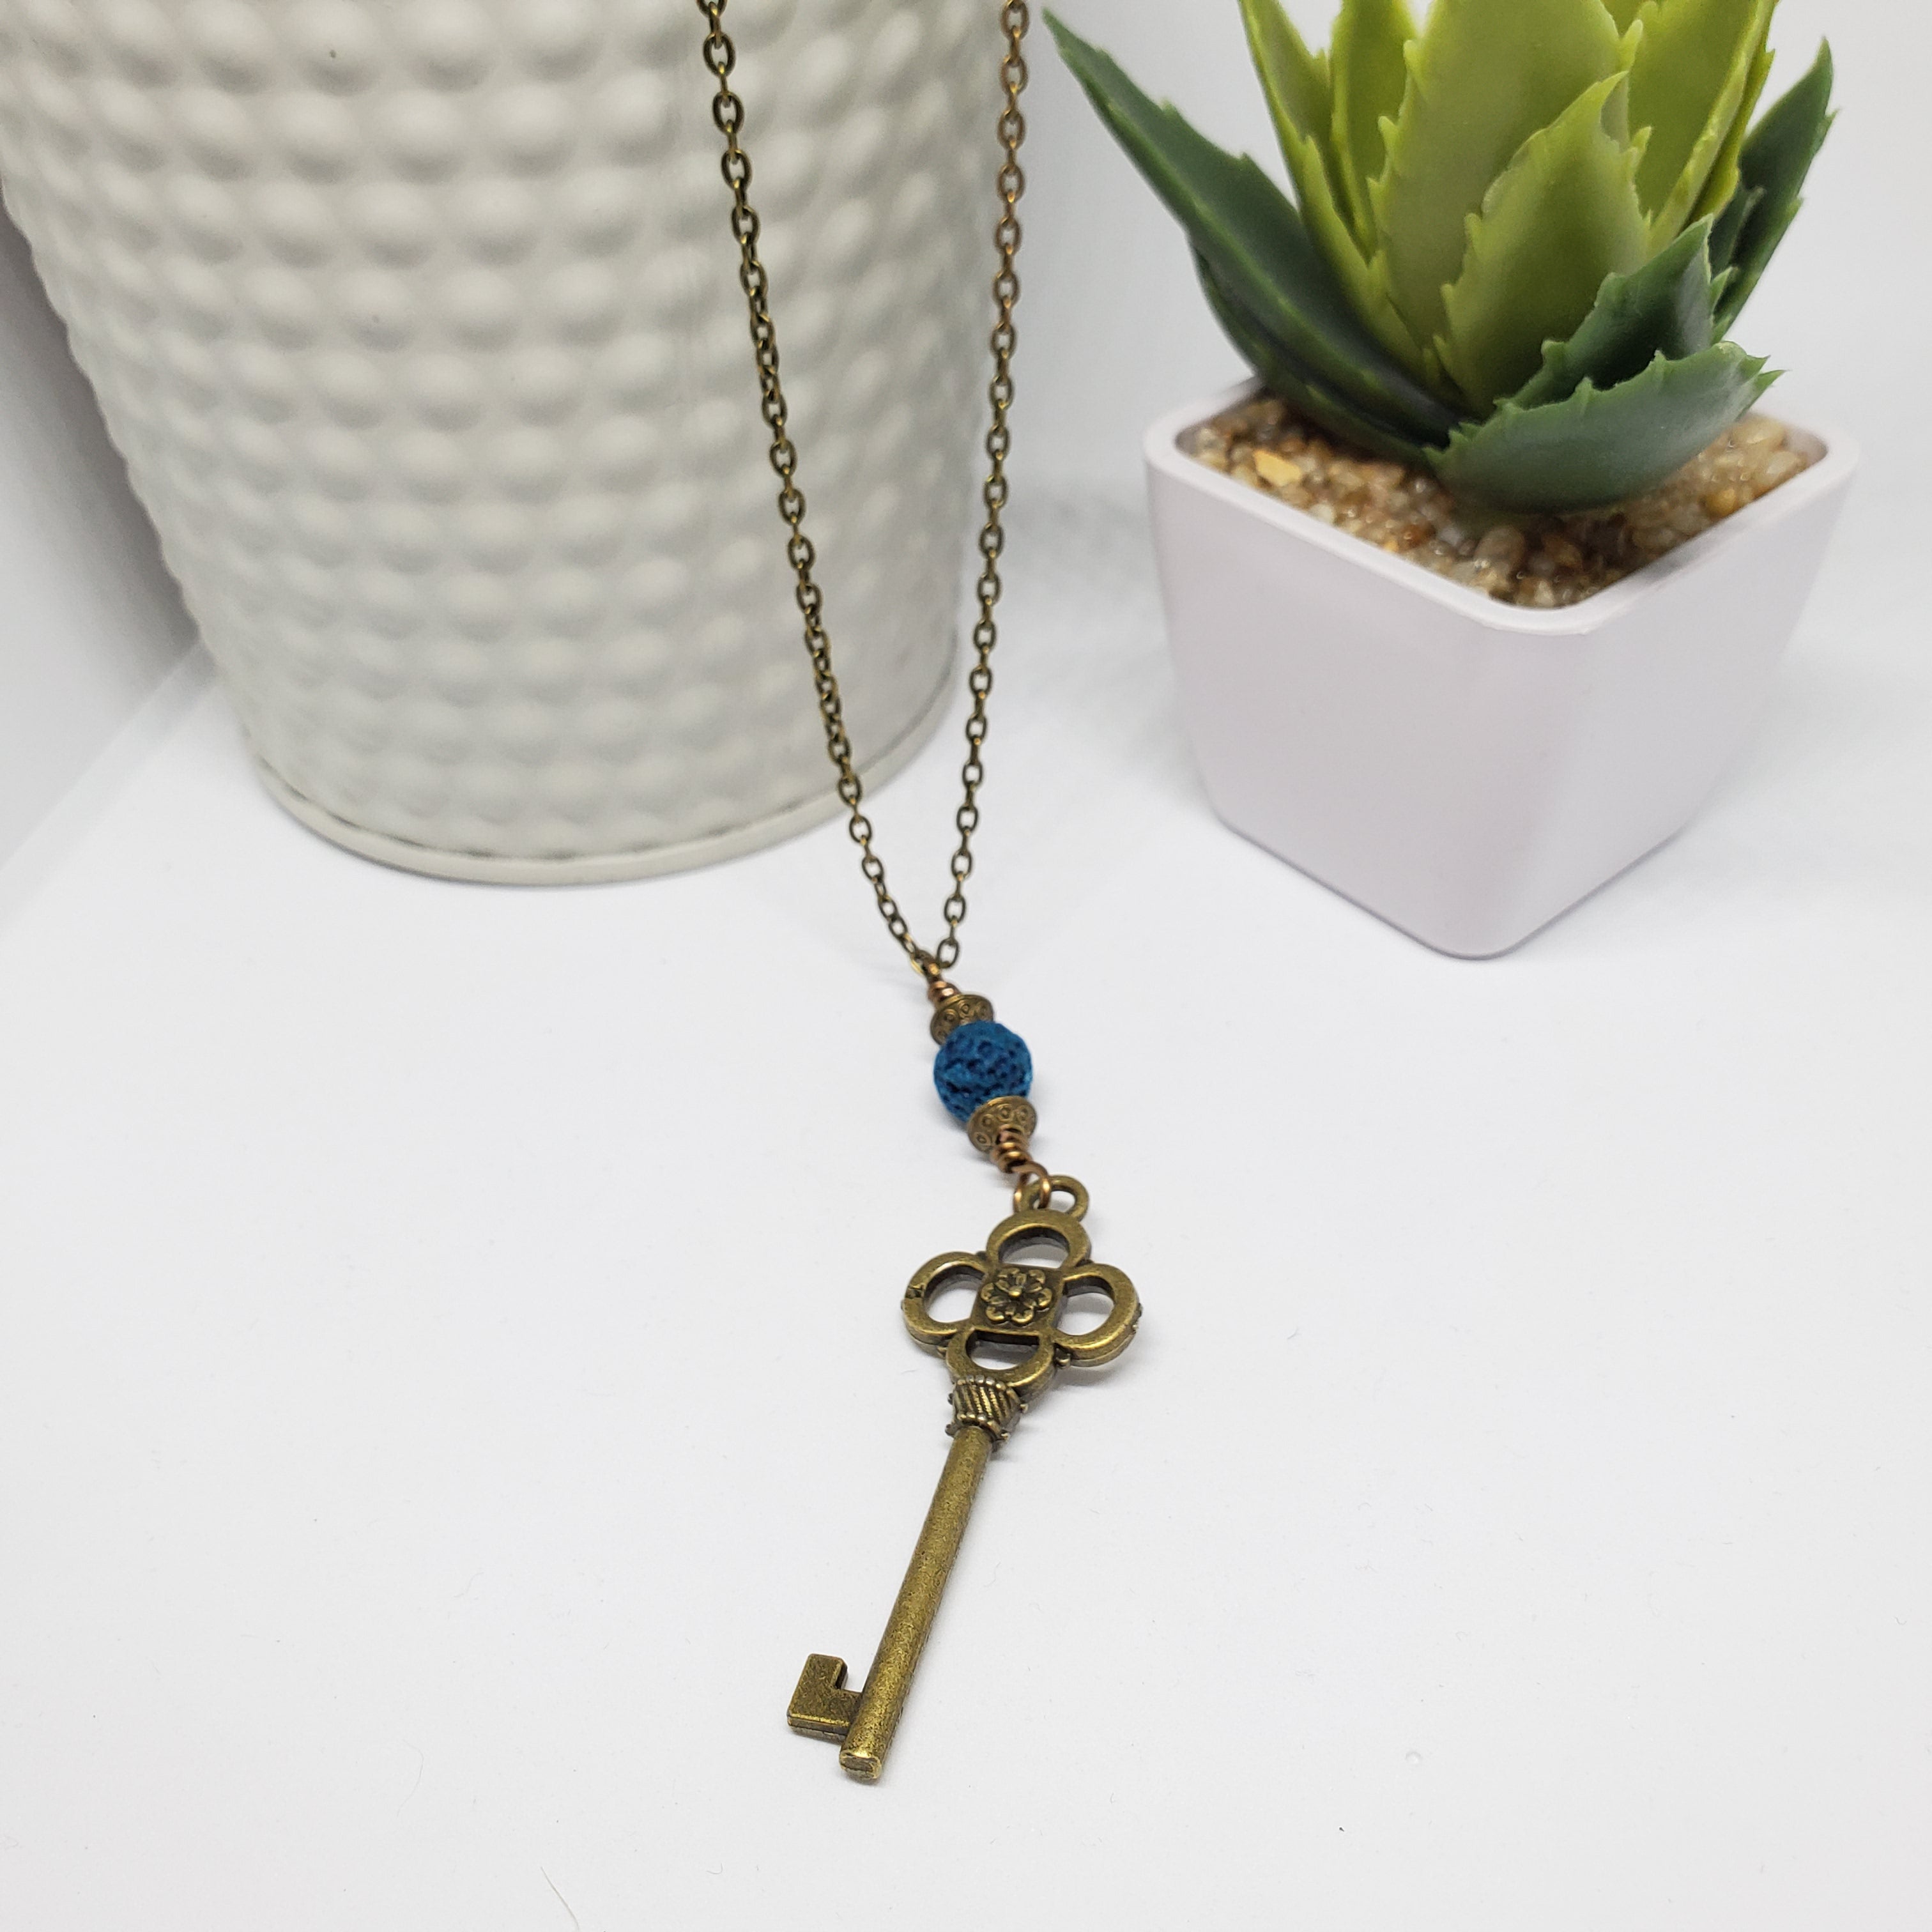 Antique Bronze Key with Blue Lava Bead